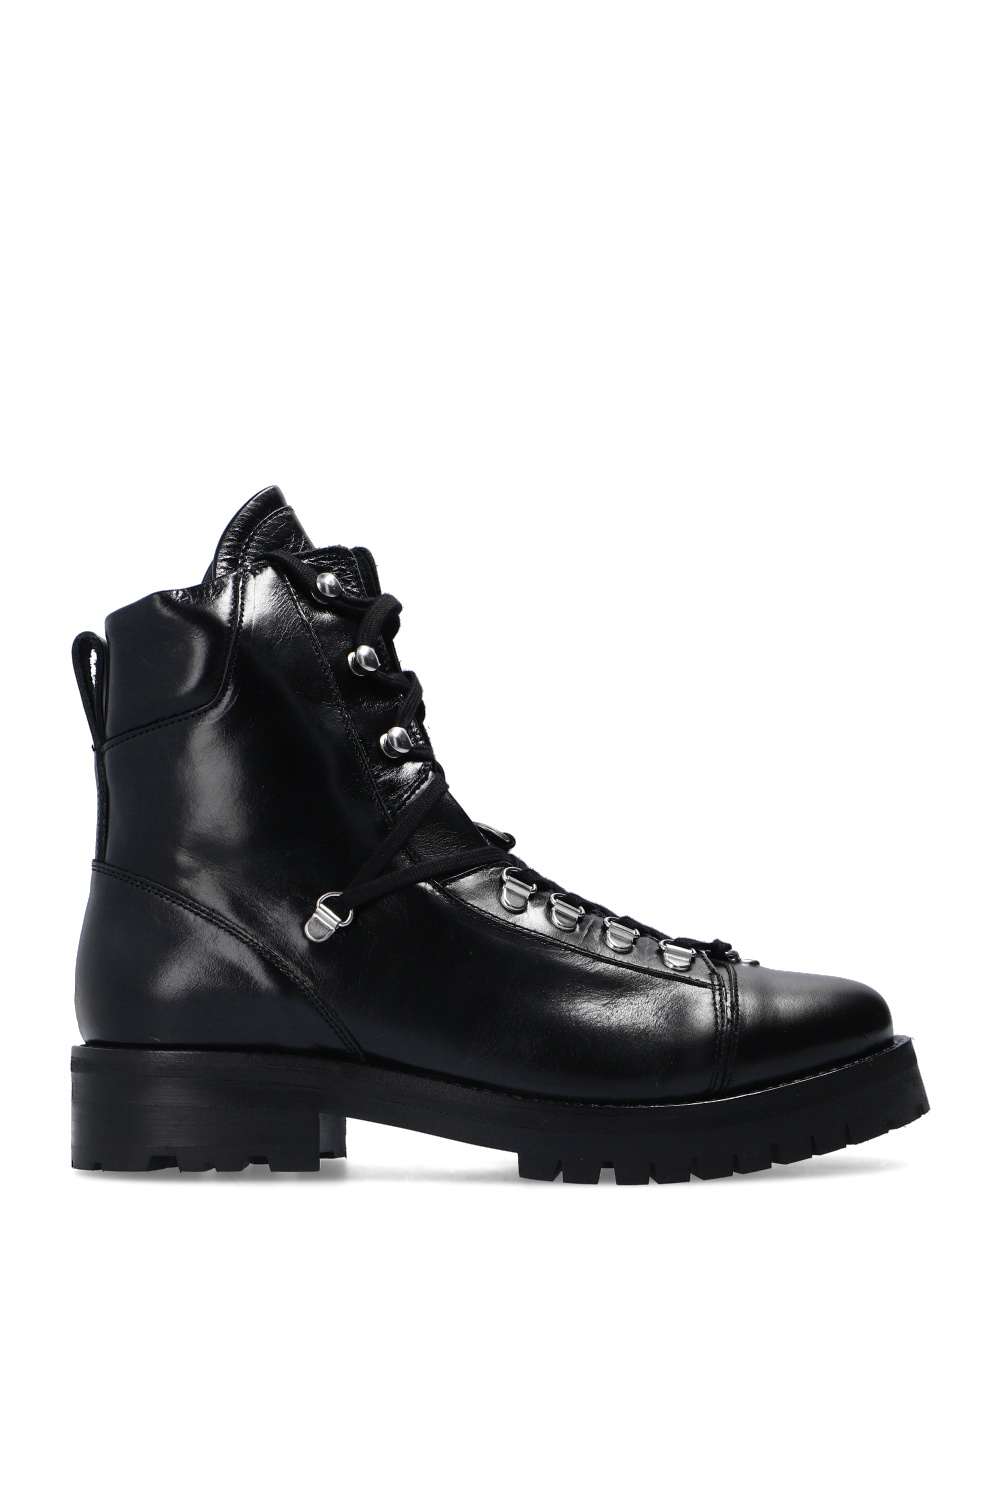 AllSaints ‘Franka’ lace-up boots